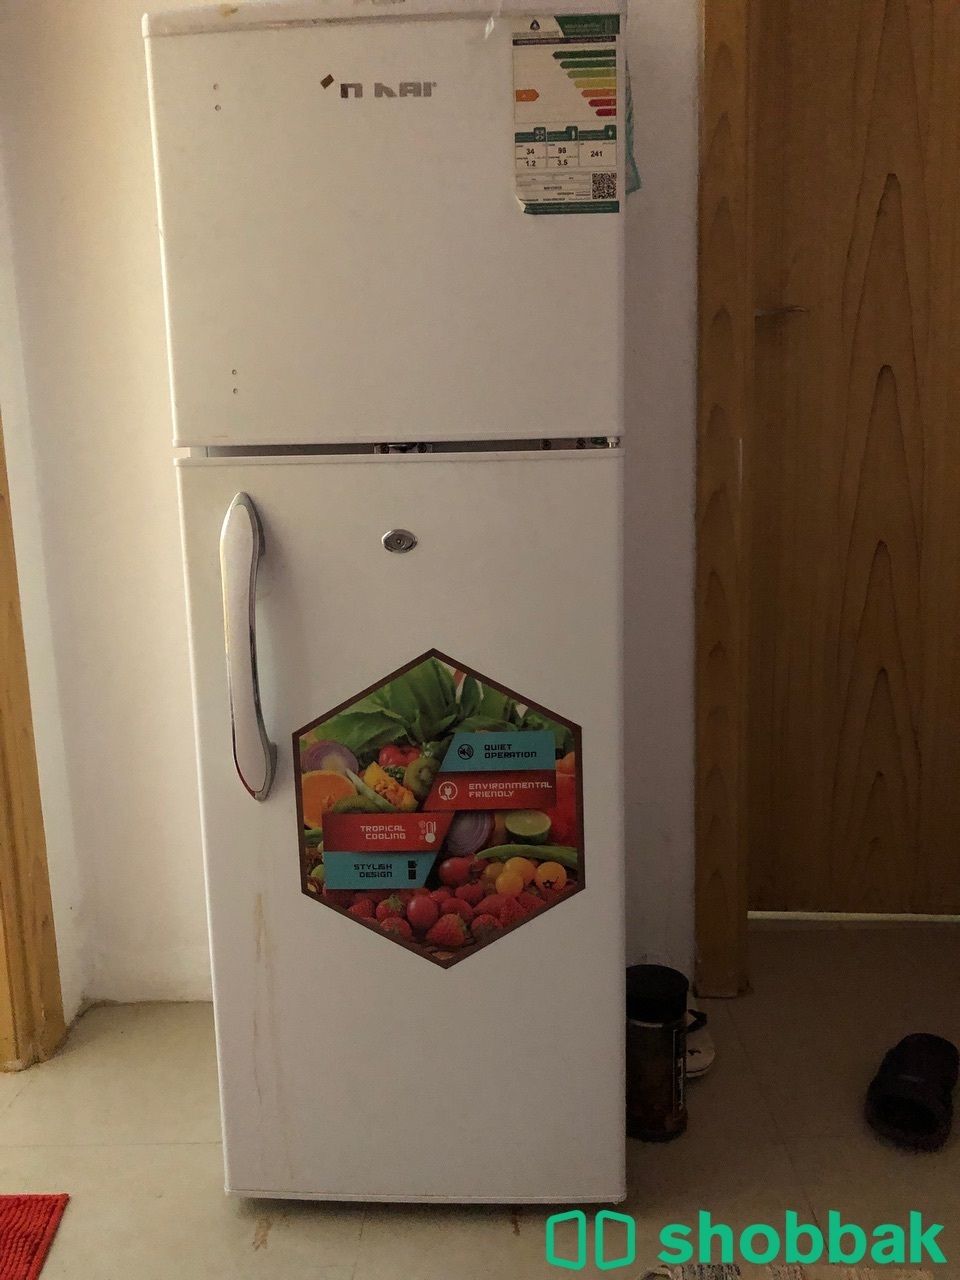 Nikei brand two door refrigerator Shobbak Saudi Arabia